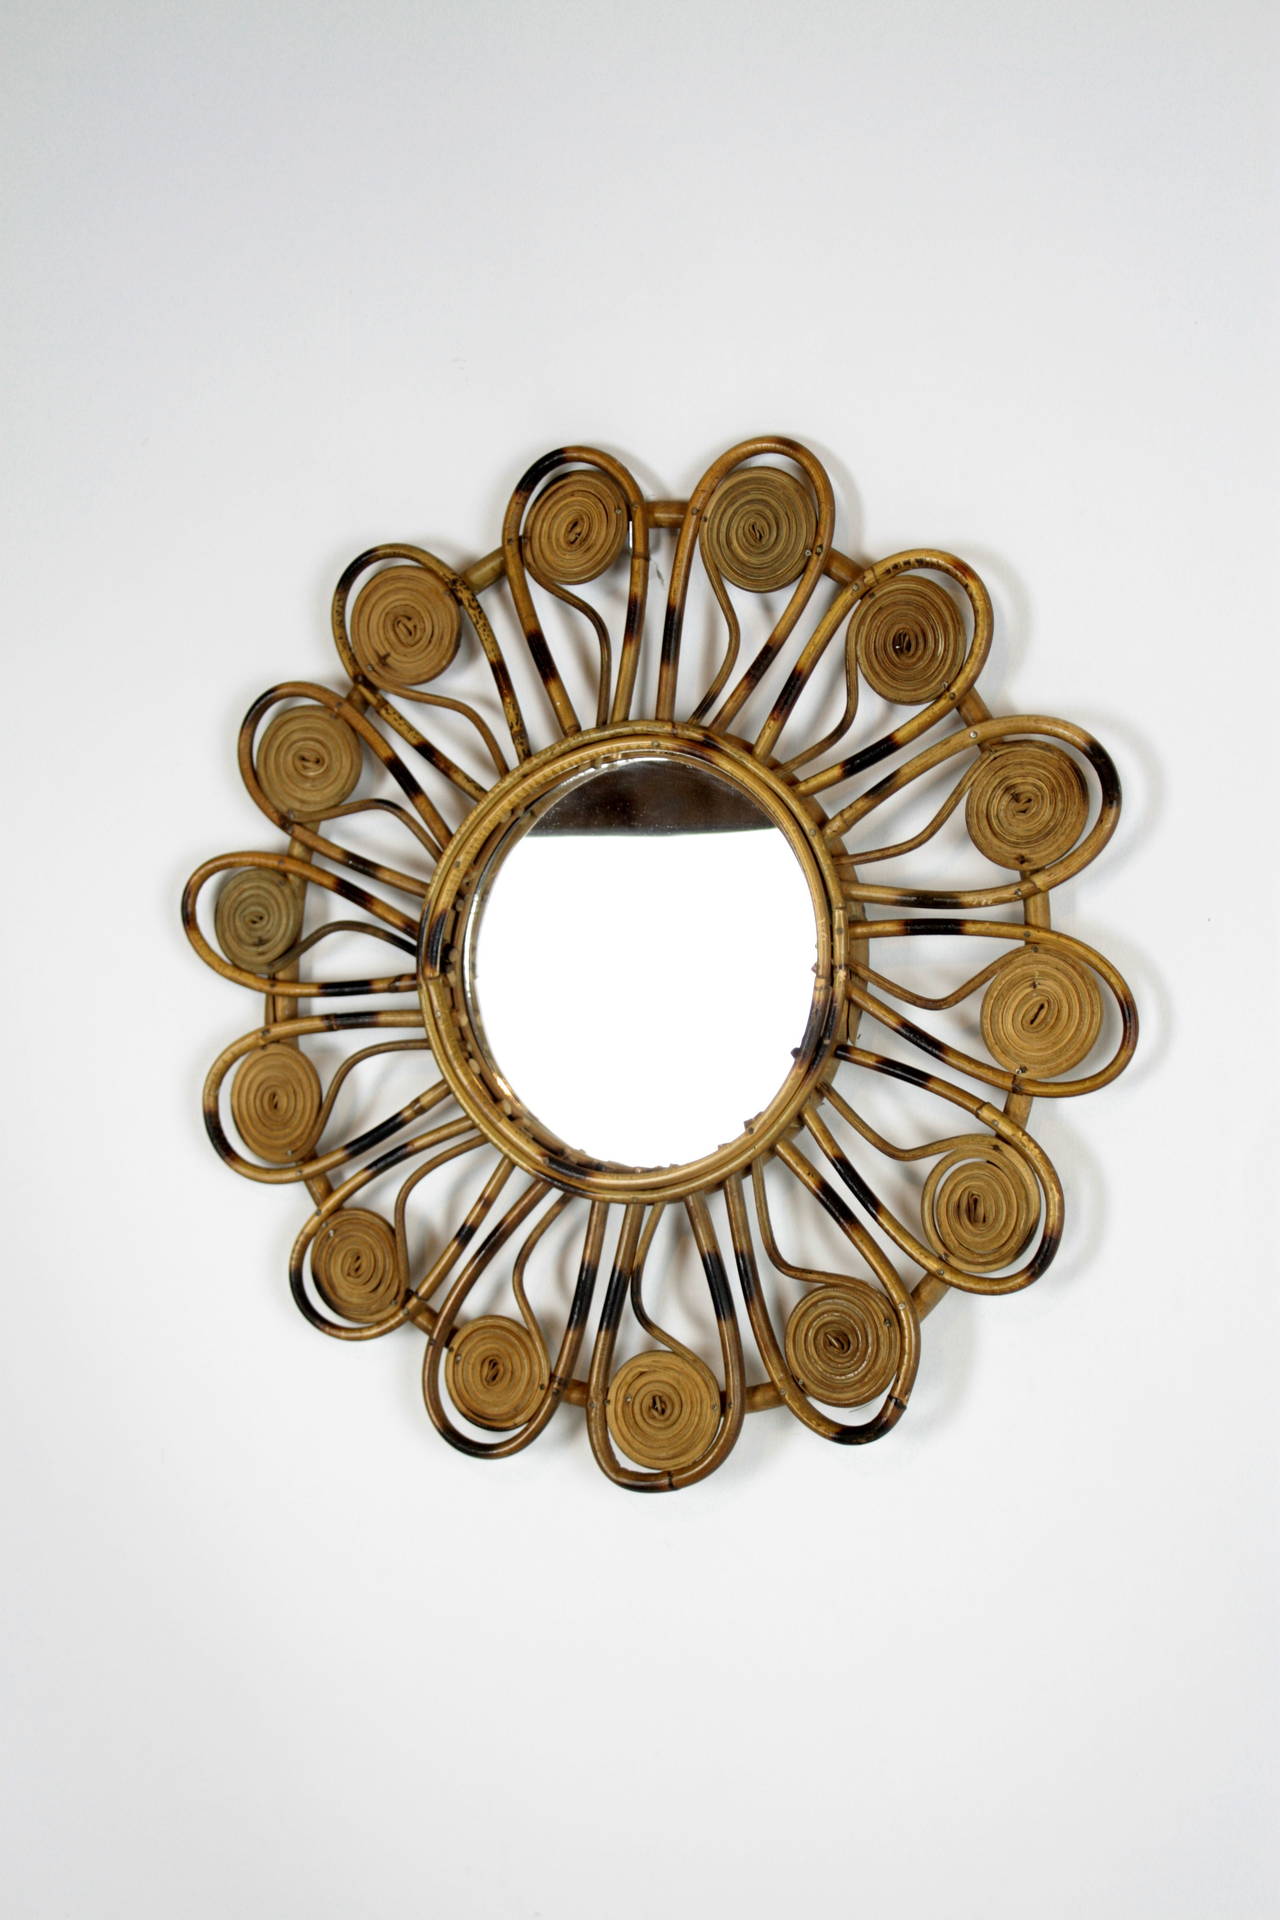 Hand-Crafted French Riviera Wicker Flower Burst Mirror with Pyro Details